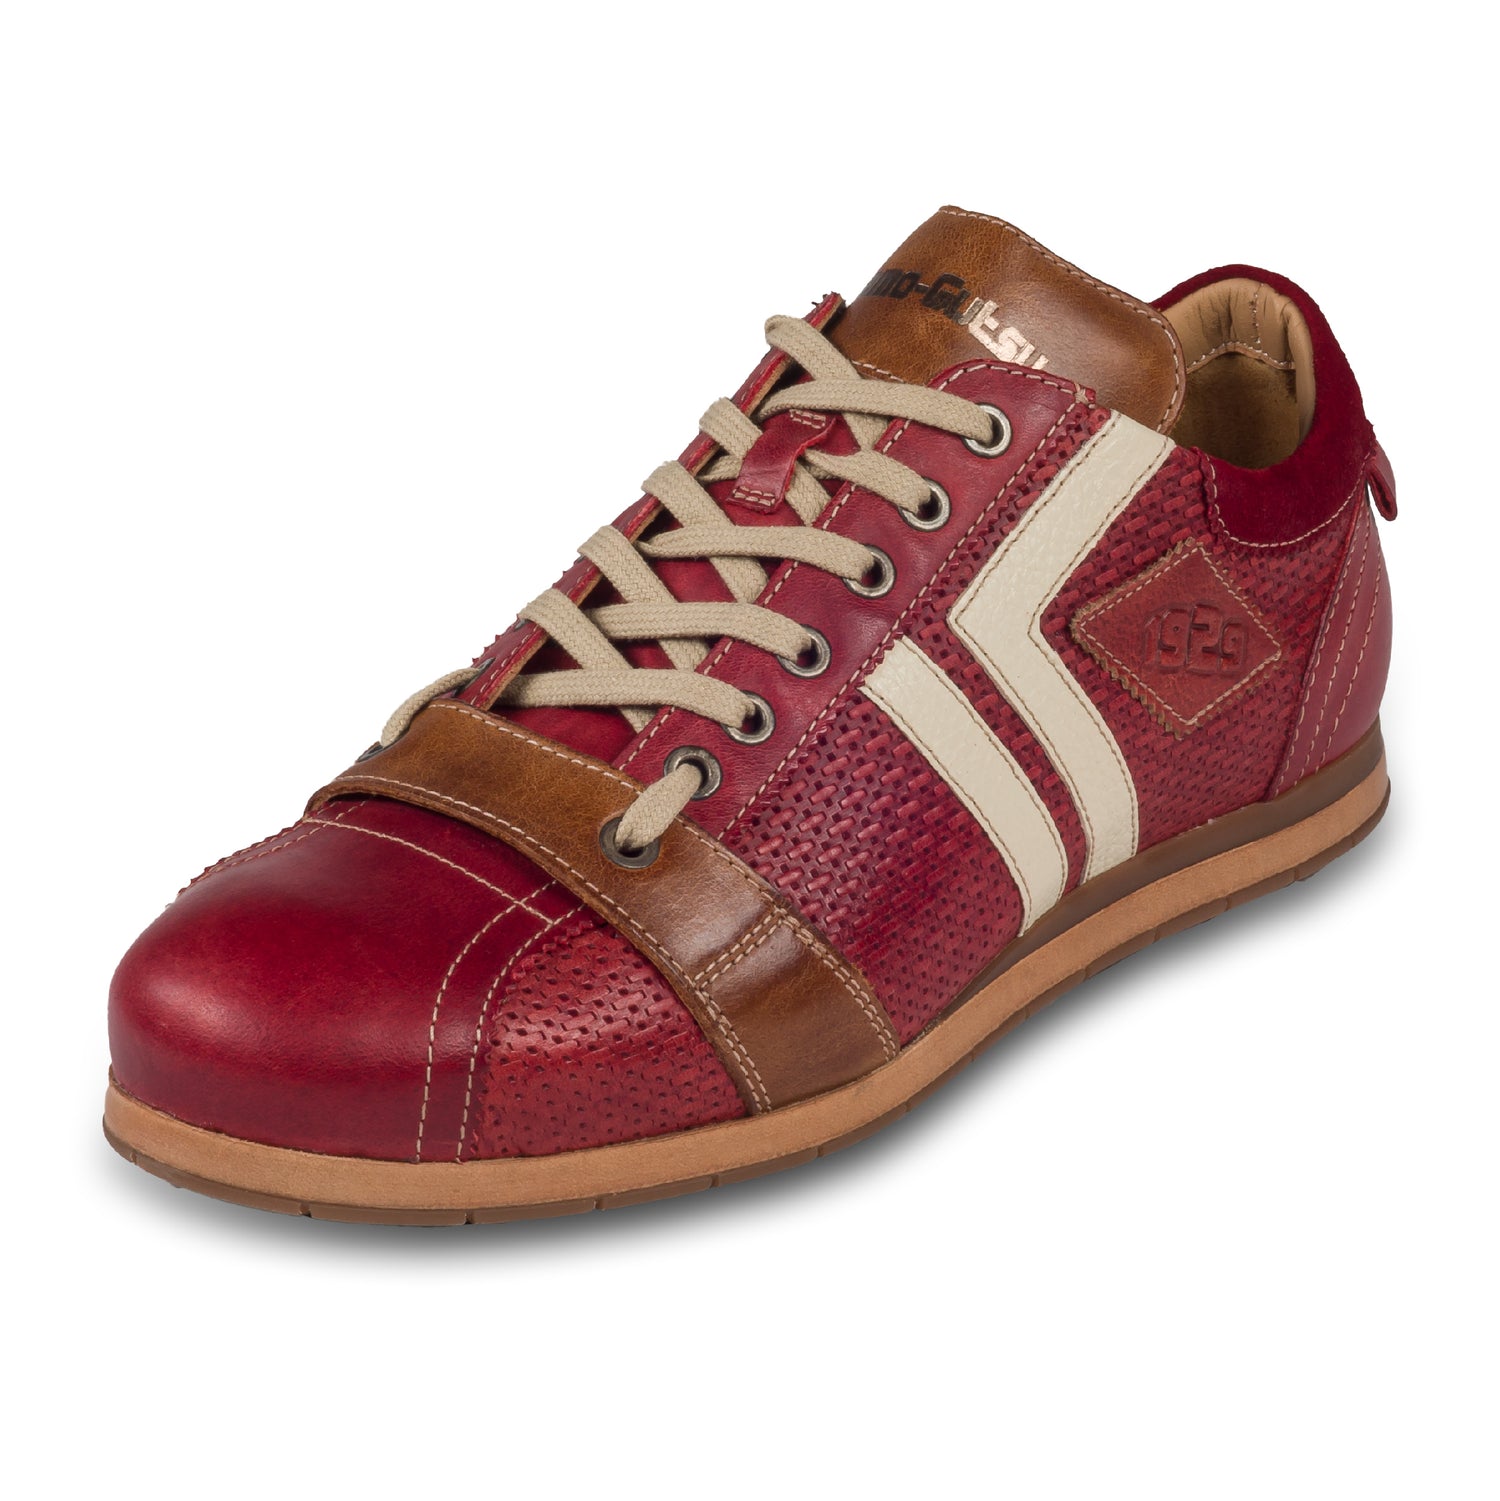 KAMO-GUTSU Italienischer Herren Leder Sneaker, rot, Retro-Optik, Modell TIFO-03 rosso. Handgefertigt. Schräge Ansicht linker Schuh.